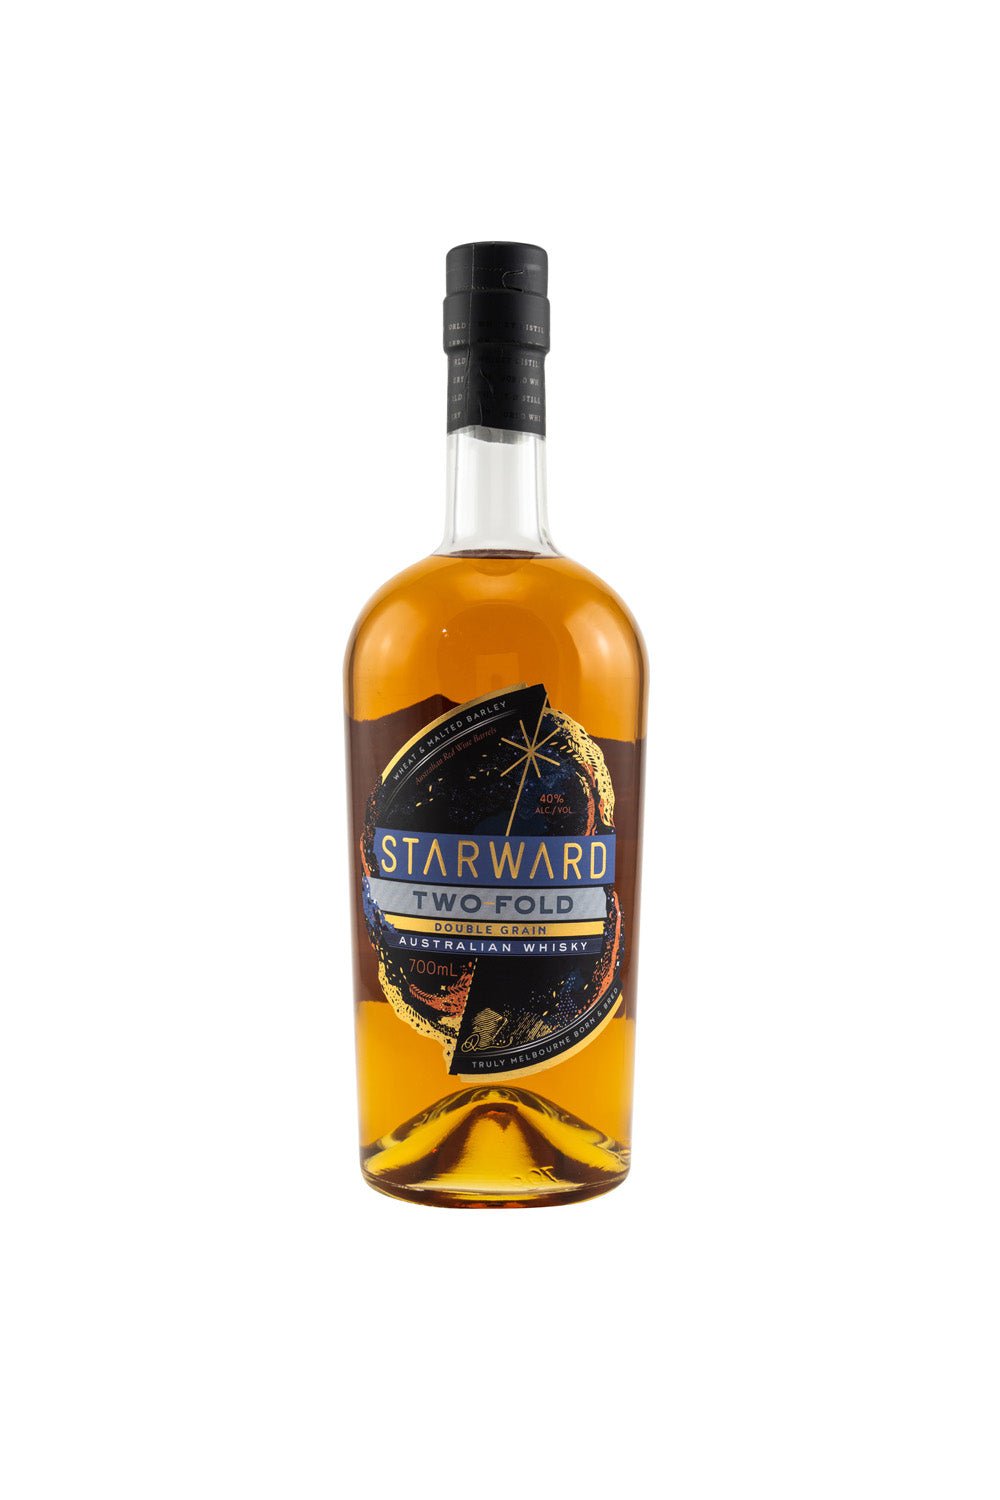 Starward Two-Fold Australian Double Grain Whisky 40% vol. 700ml - Maltimore